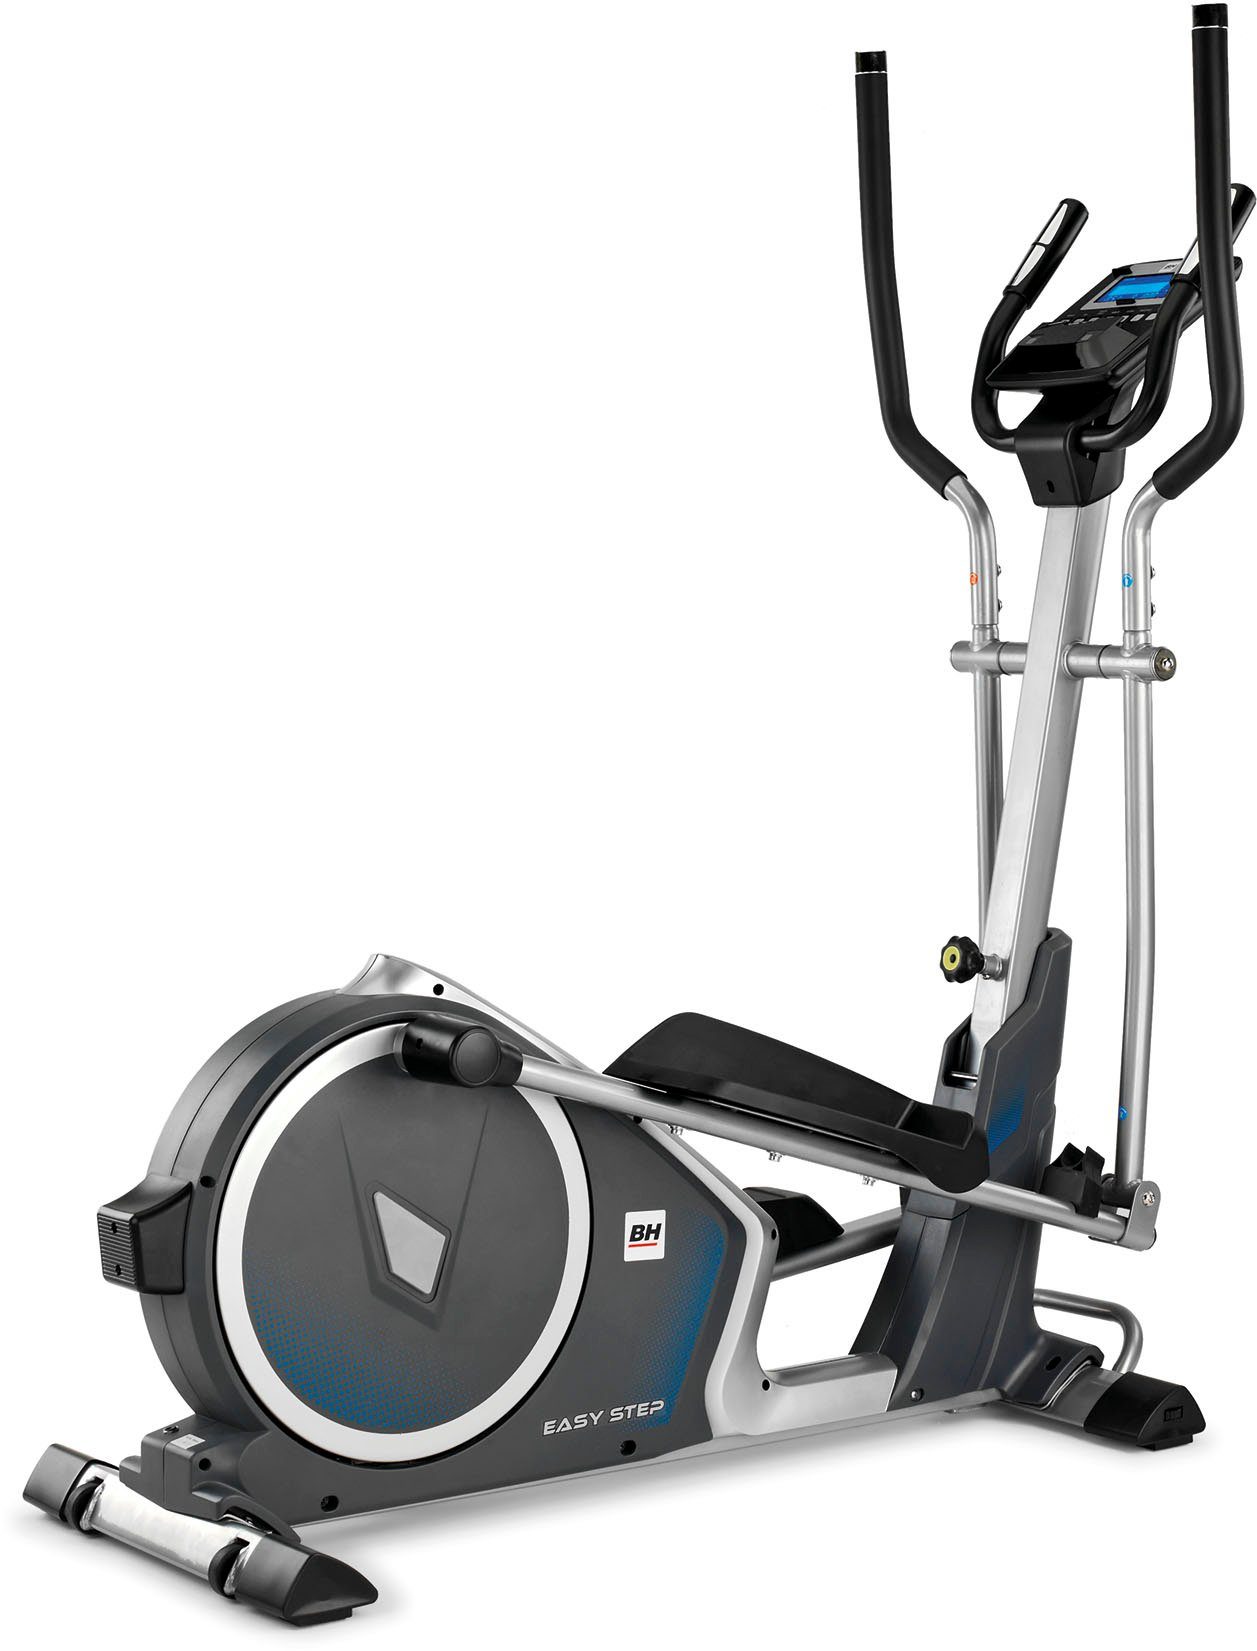 BH Fitness Crosstrainer easystep Dual G2518 | Crosstrainer